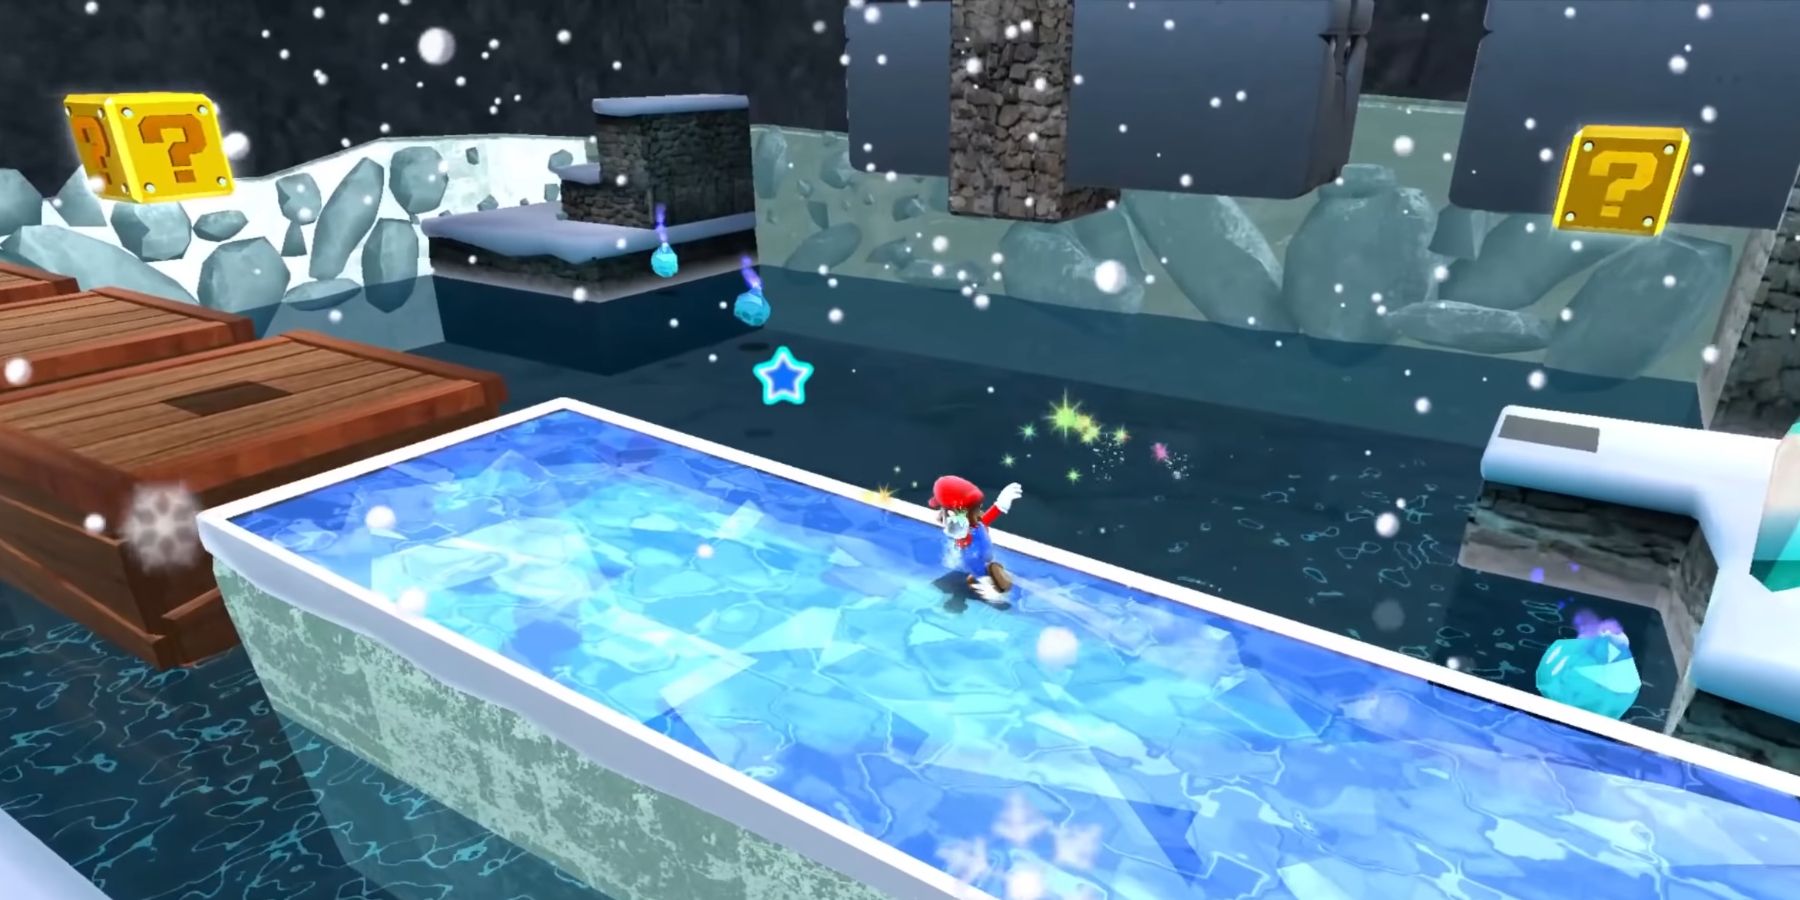 Mario skating through Freezeflame Galaxy in Super Mario Galaxy